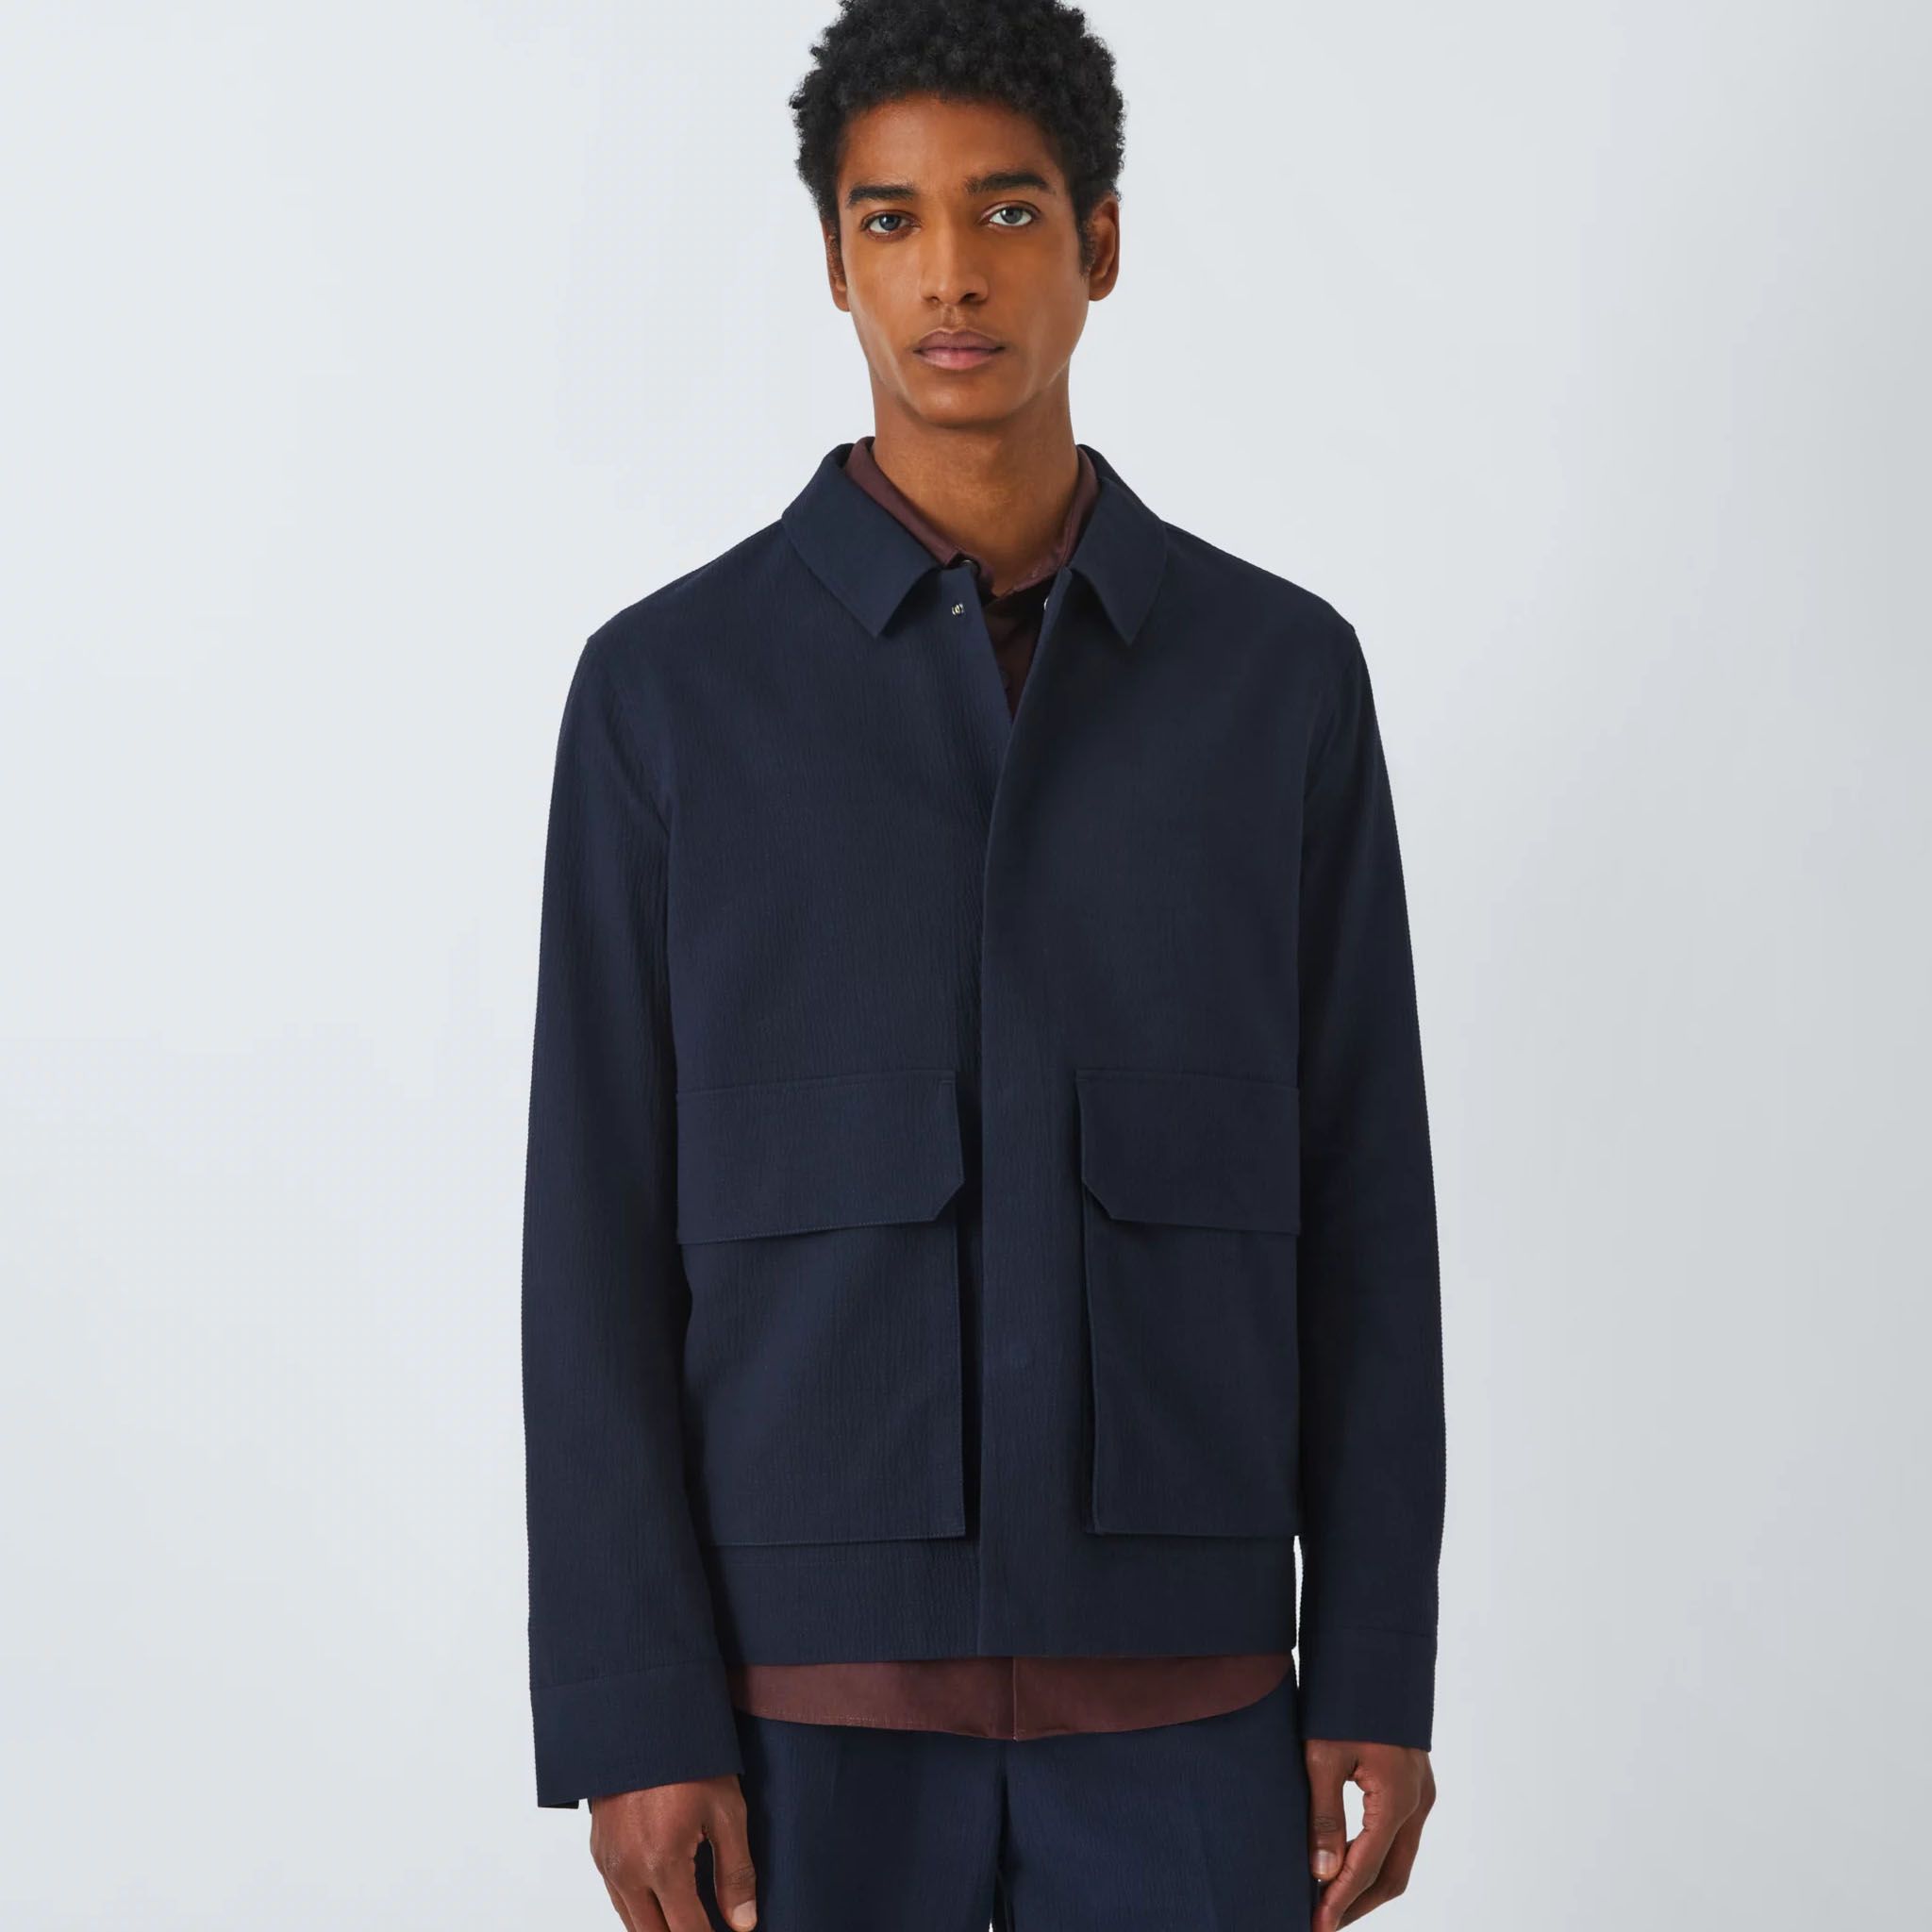 Coats & Jackets offers